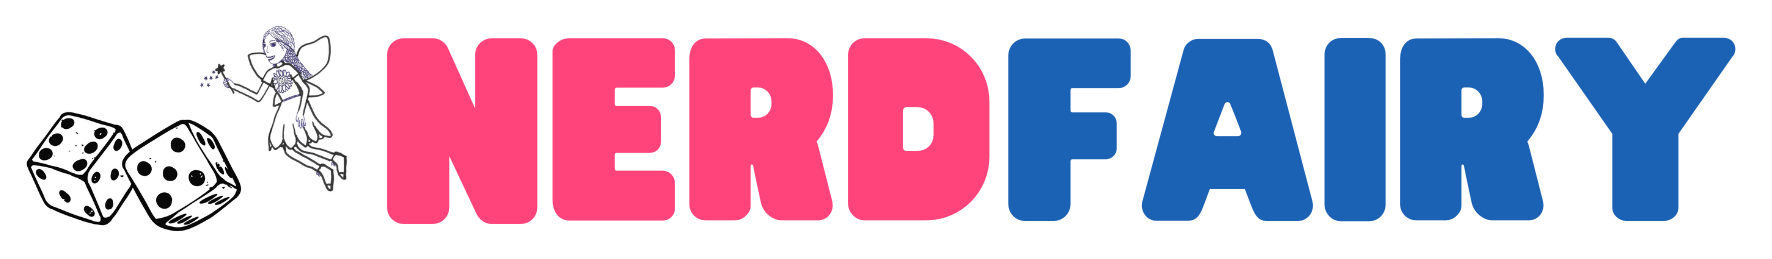 NerdFairy logo